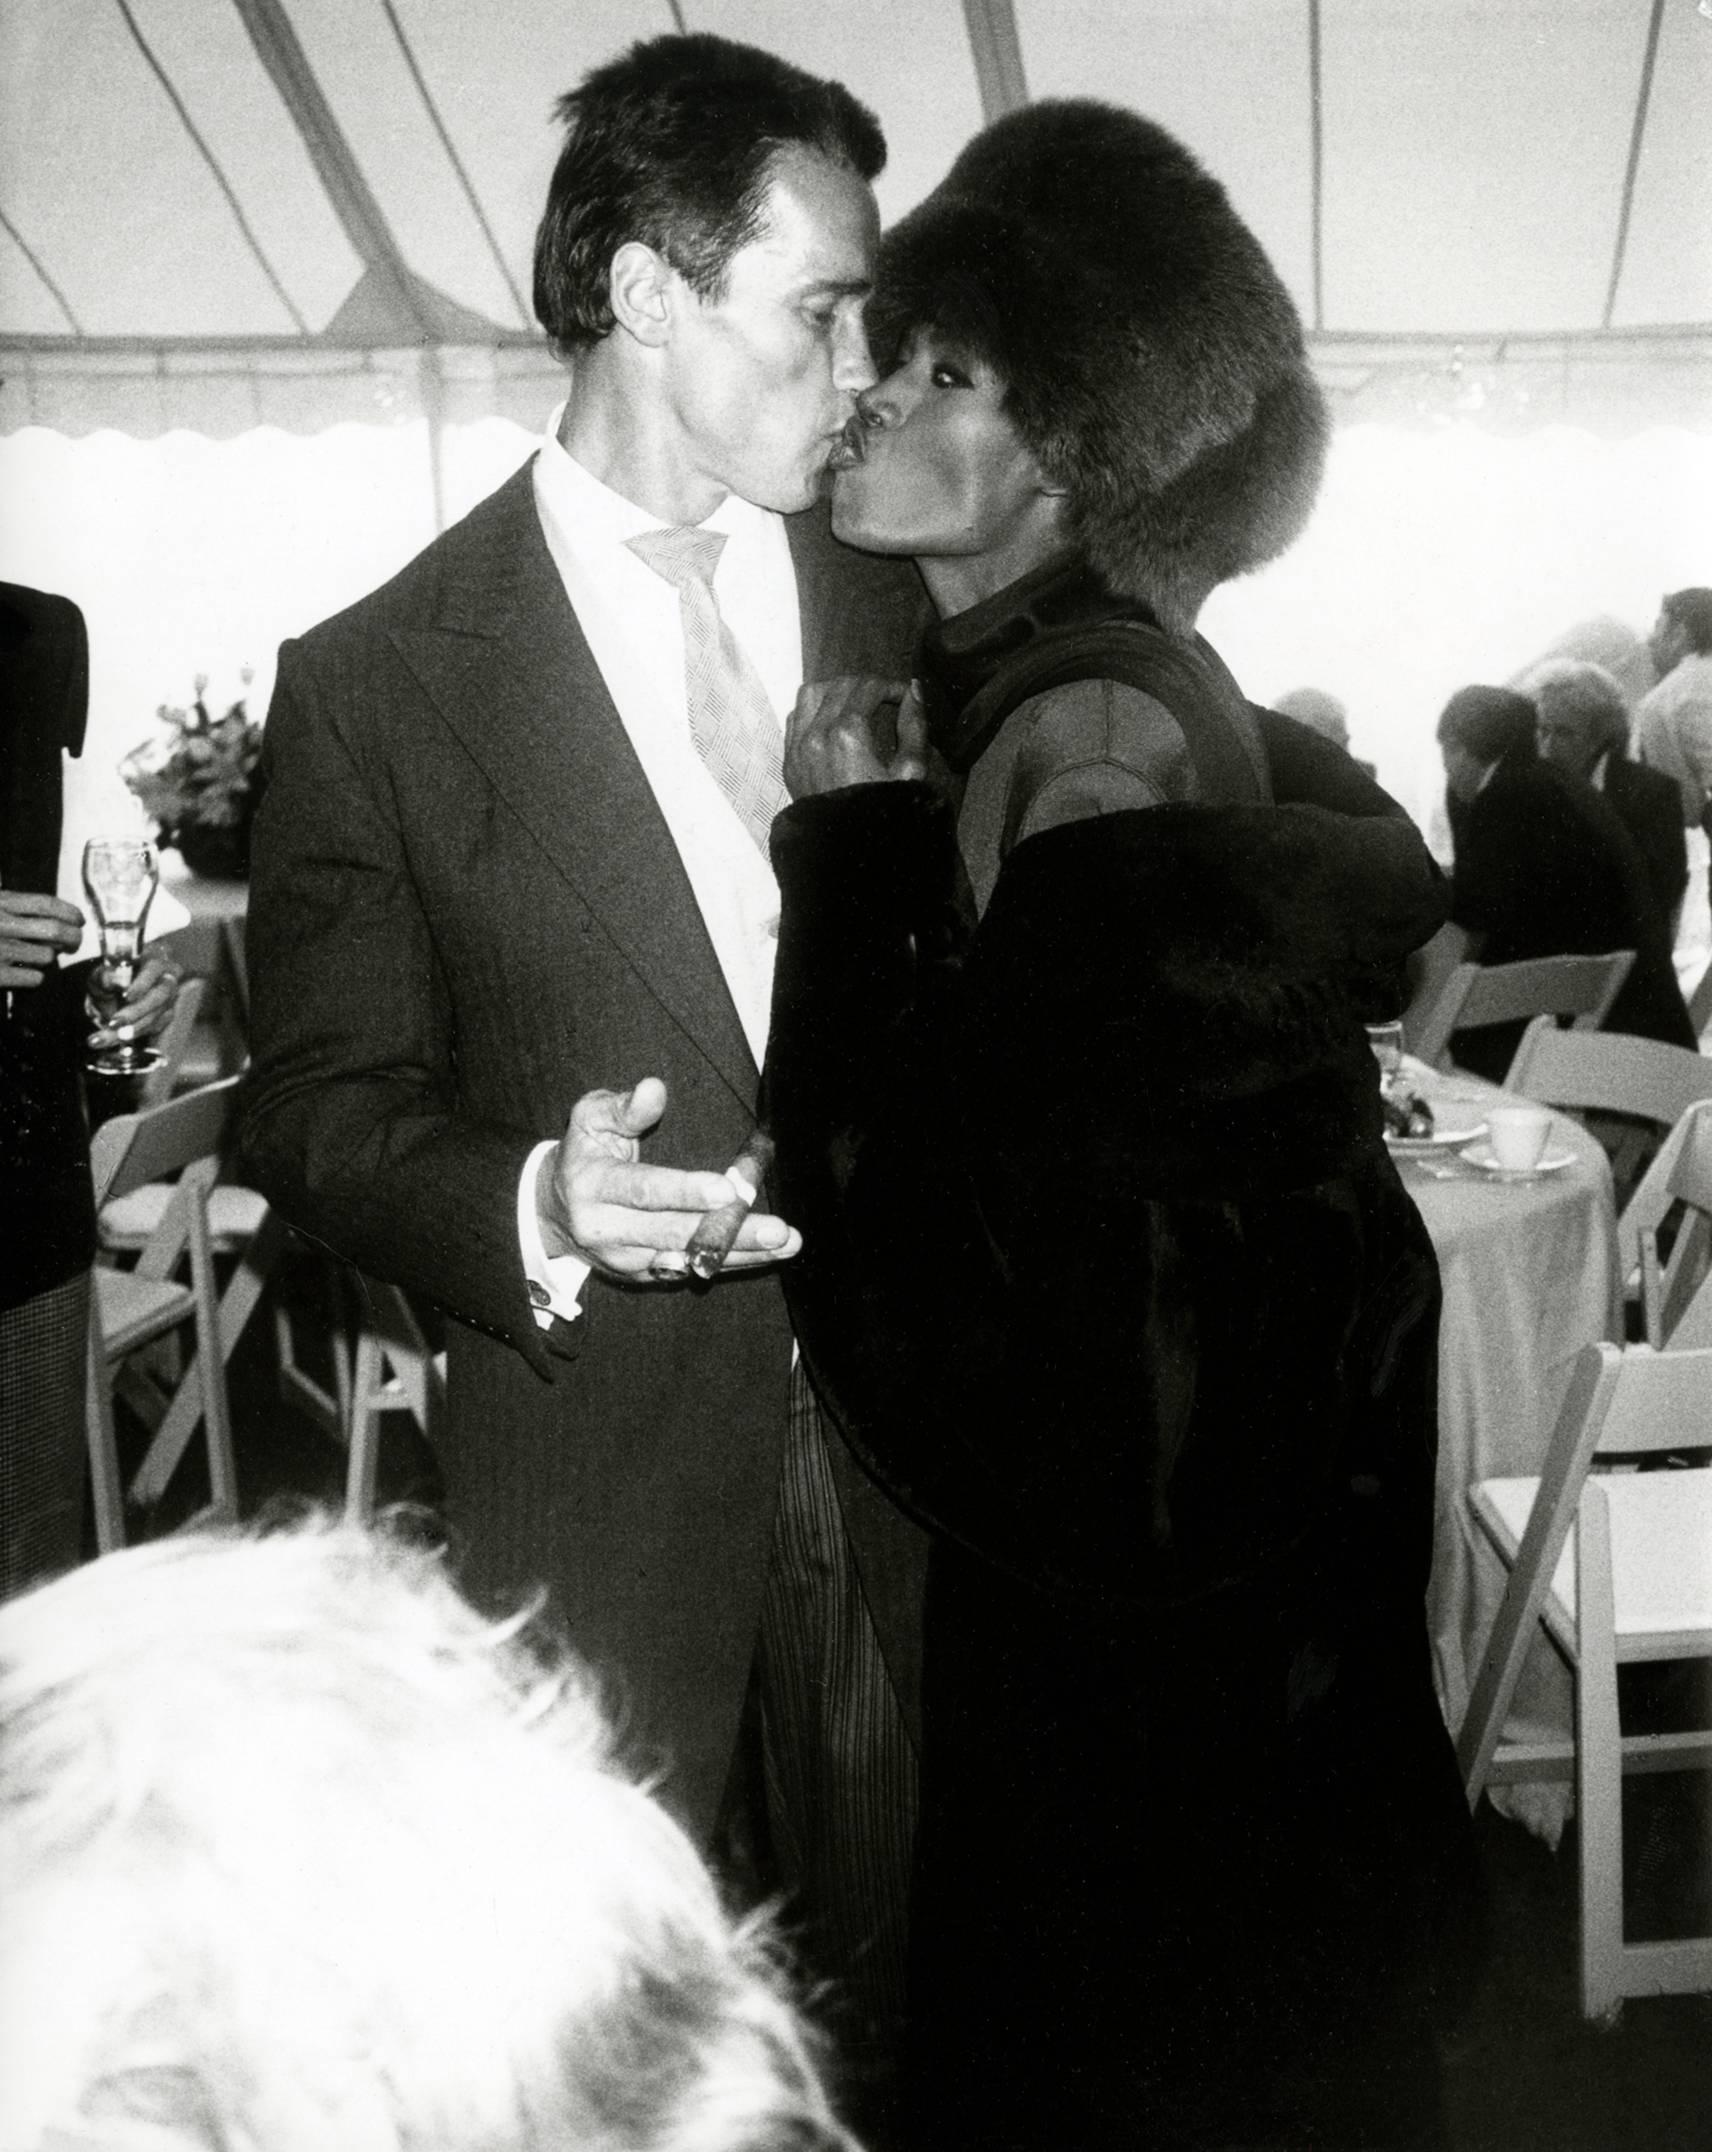 Black and White Photograph Andy Warhol - Arnold Schwarzenegger & Grace Jones lors de son mariage